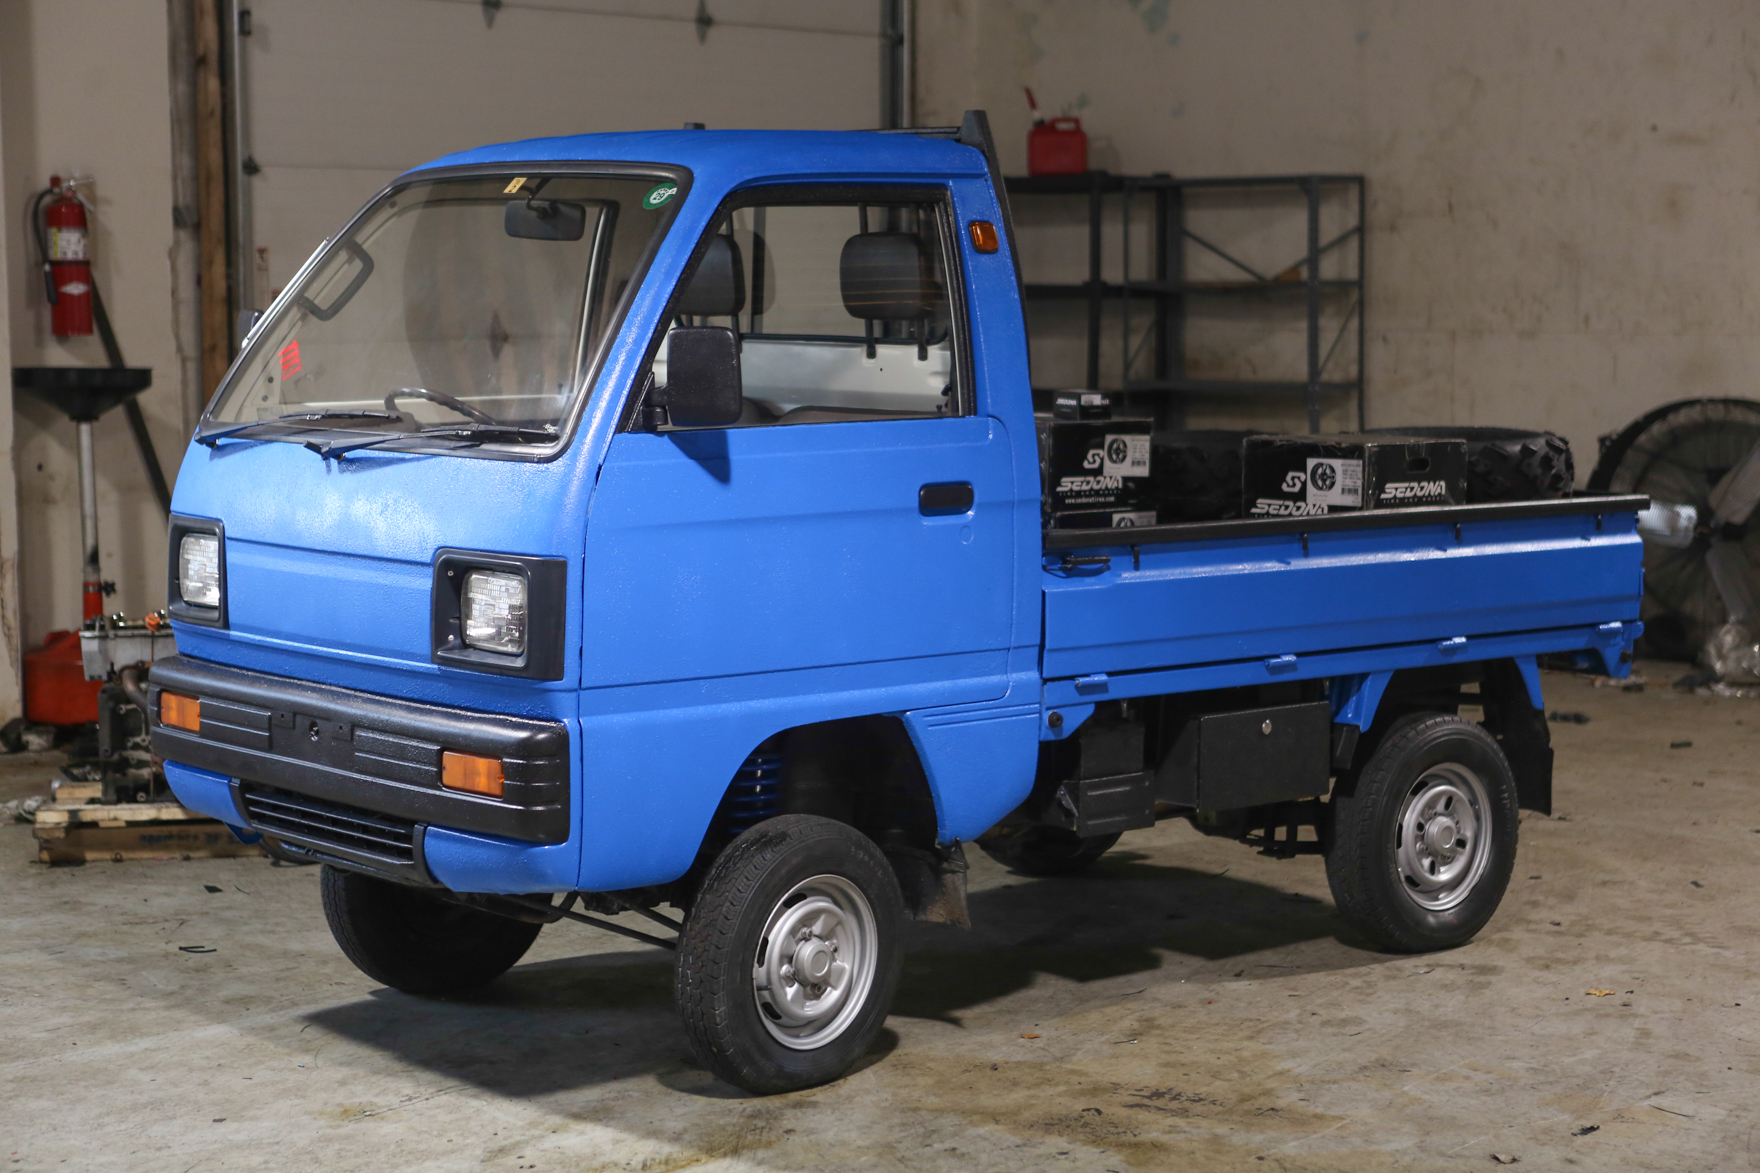 1988 Suzuki Carry 4WD - $5,600